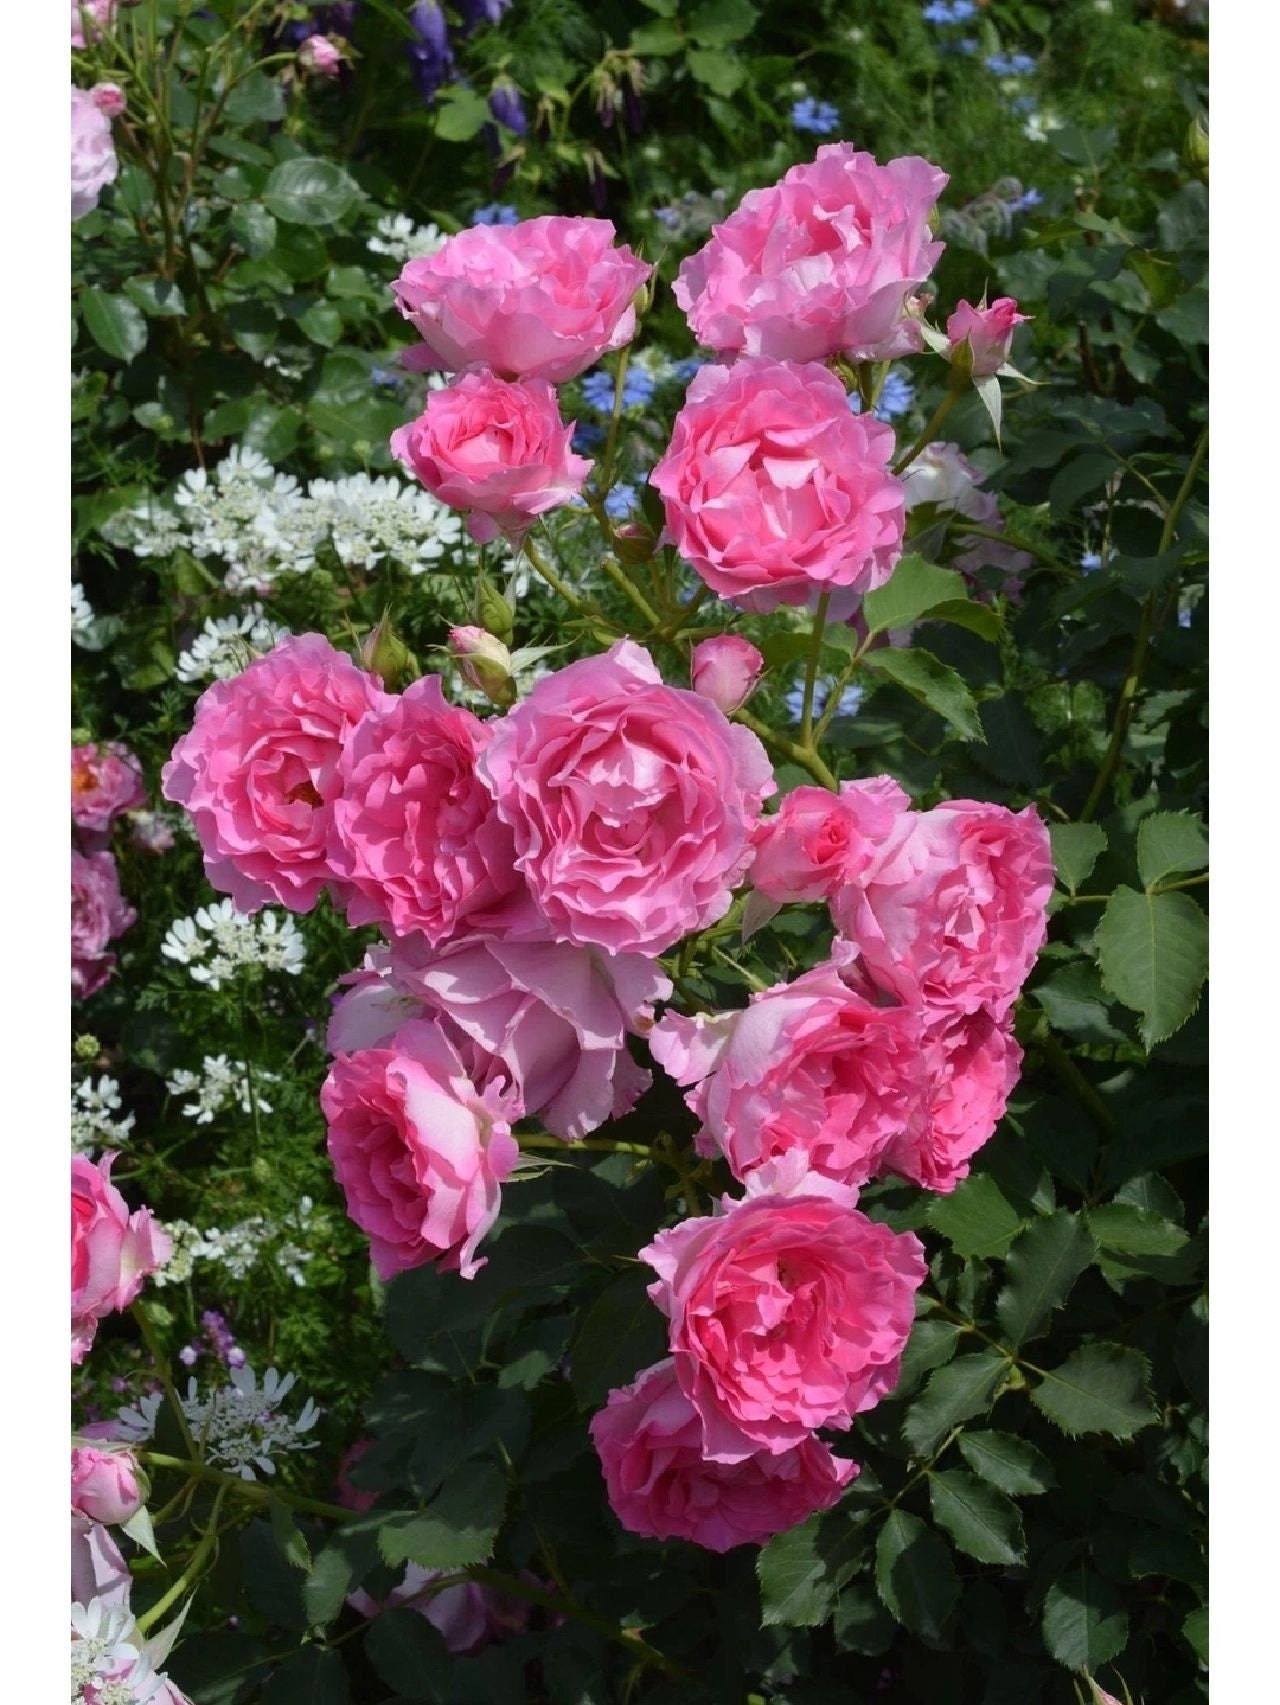 Rose｛Pink of Princess｜ ピンクオブプリンセス｝-1.5 Gal OwnRoot Live Plant|  河本オリジナル| 粉红公主 Less Thorns| Wavy Bloom